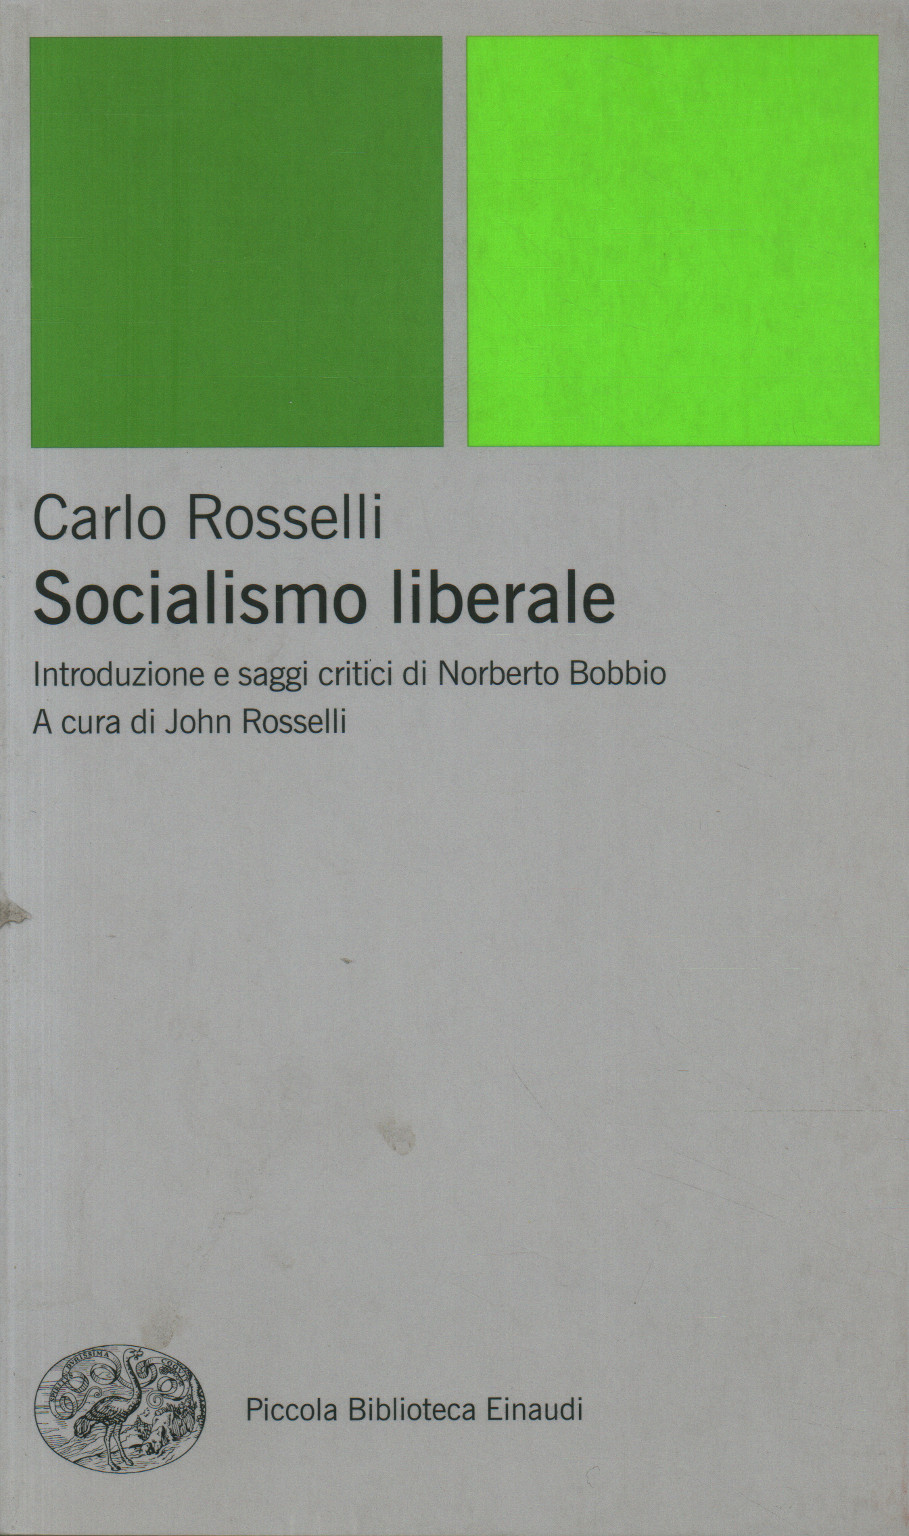 Liberal socialism, Carlo Rosselli